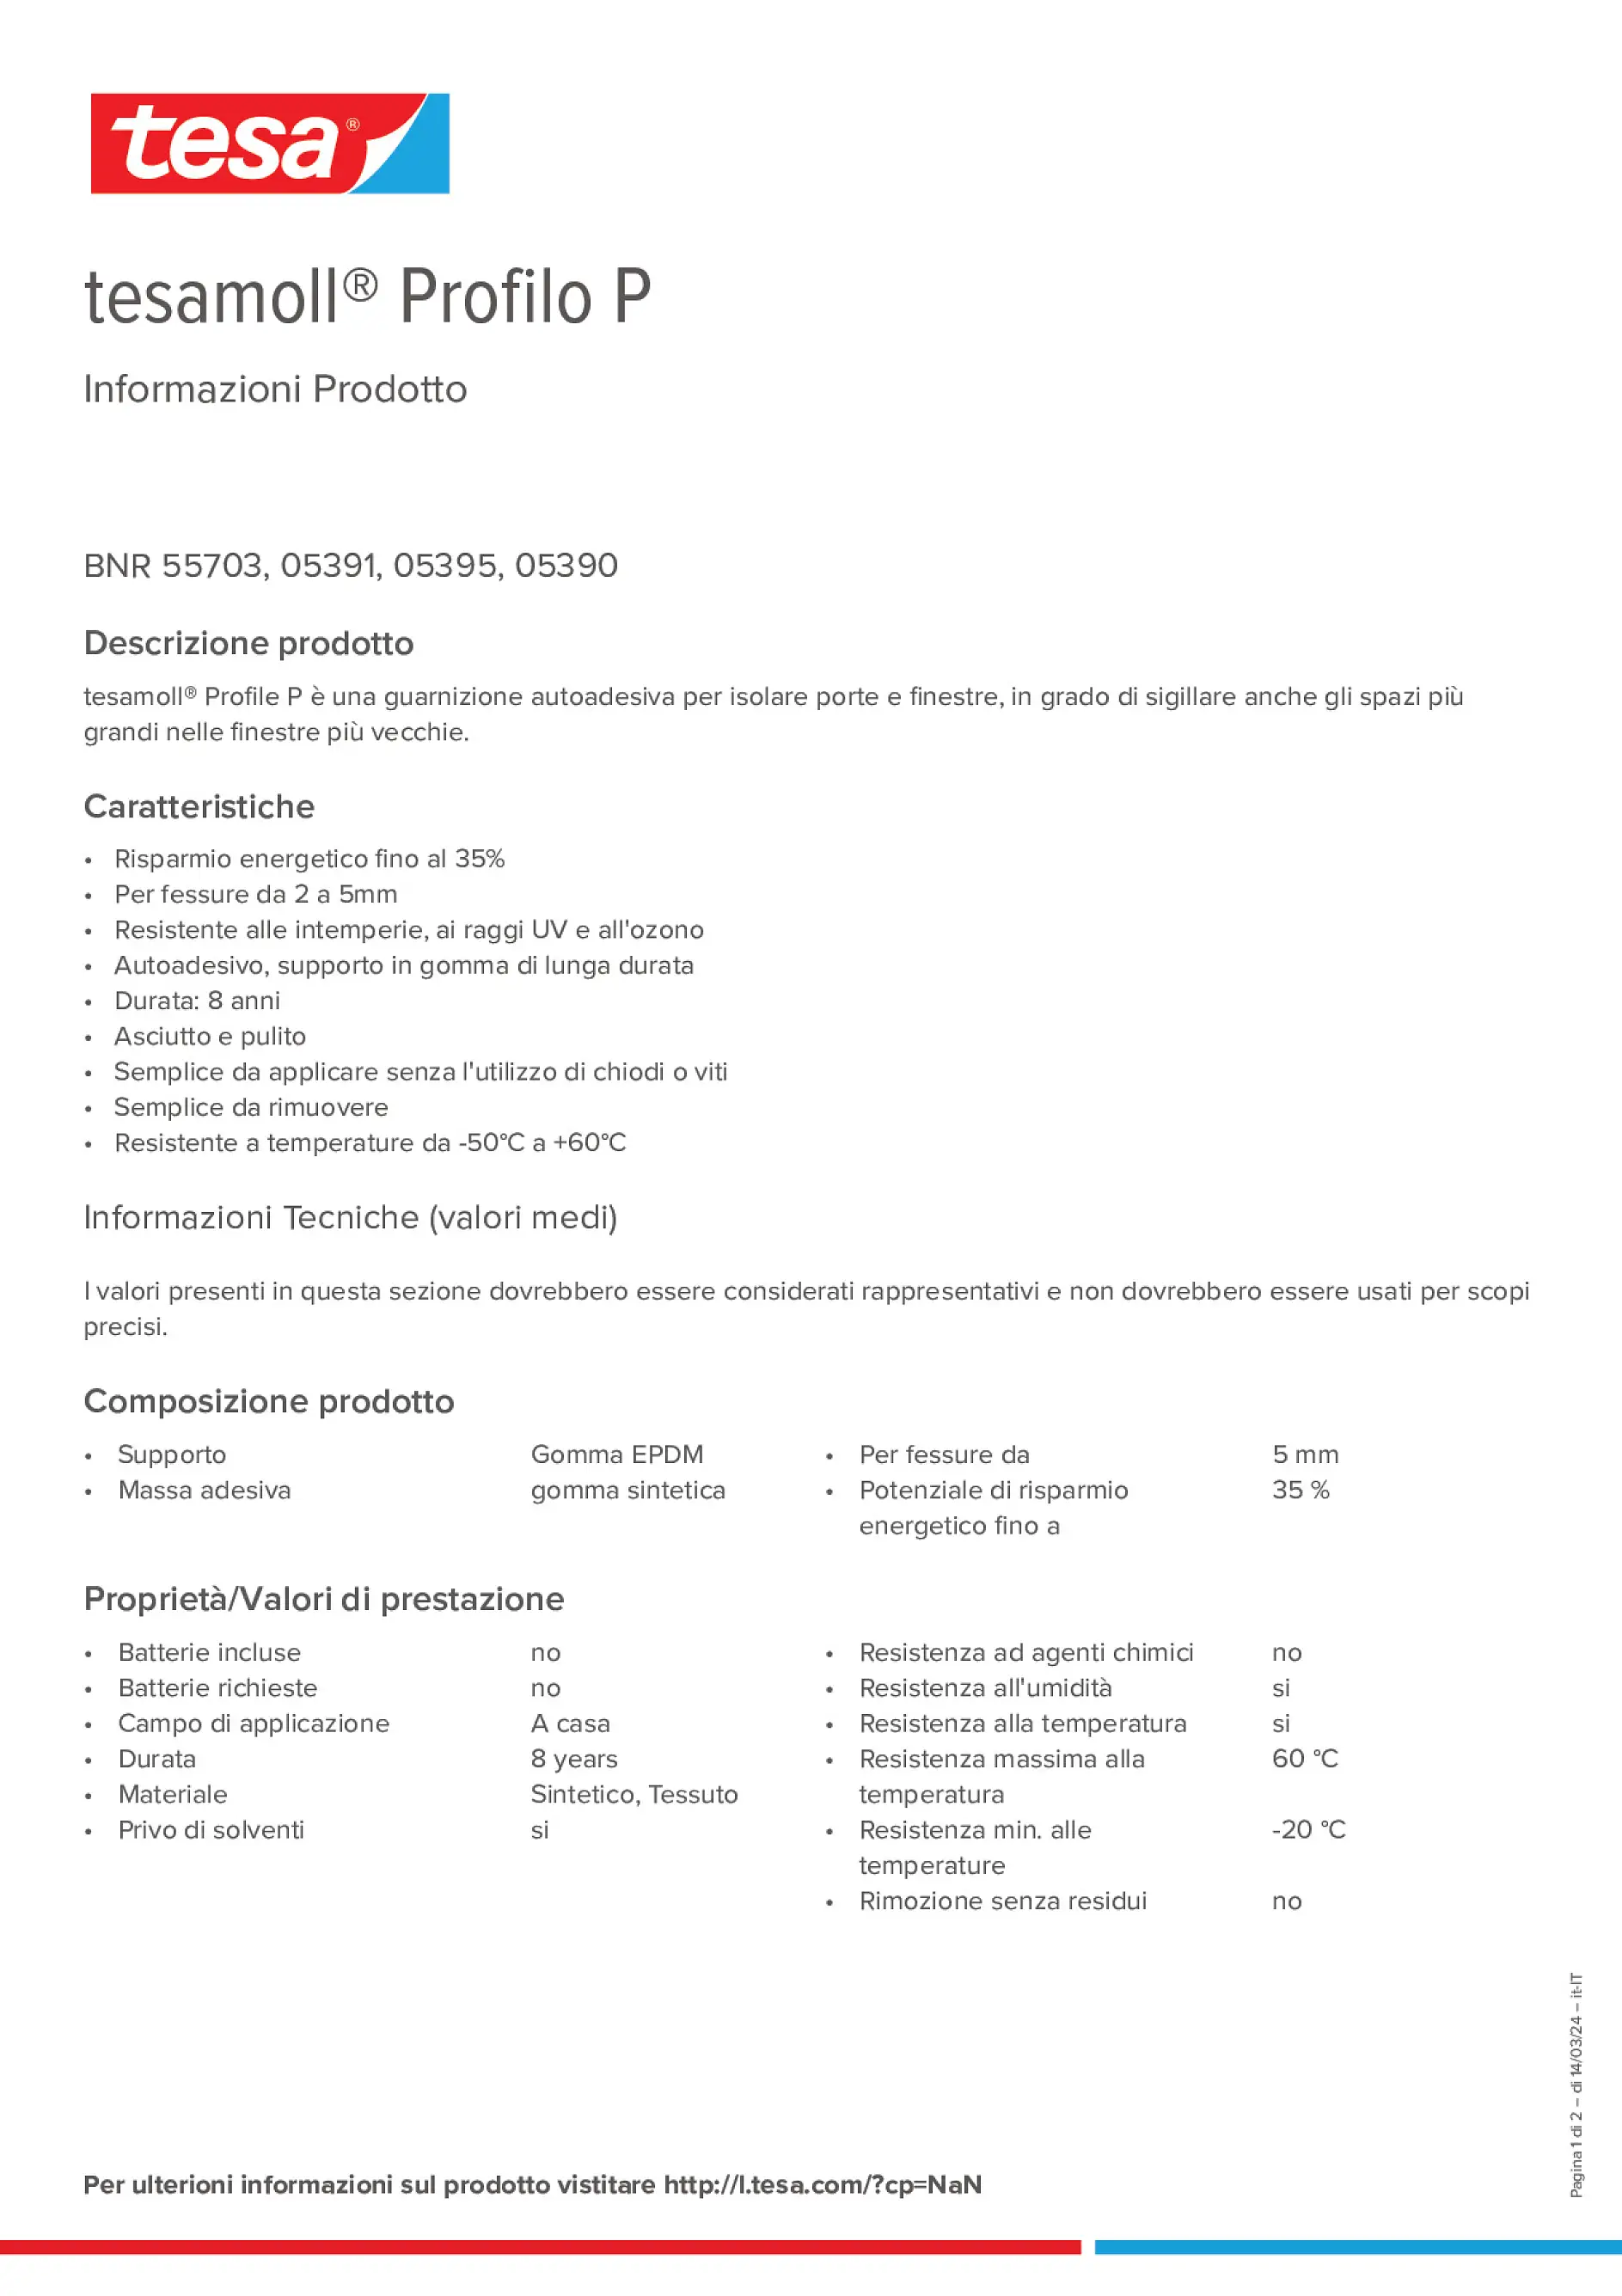 Product information_tesamoll® 5366_it-IT